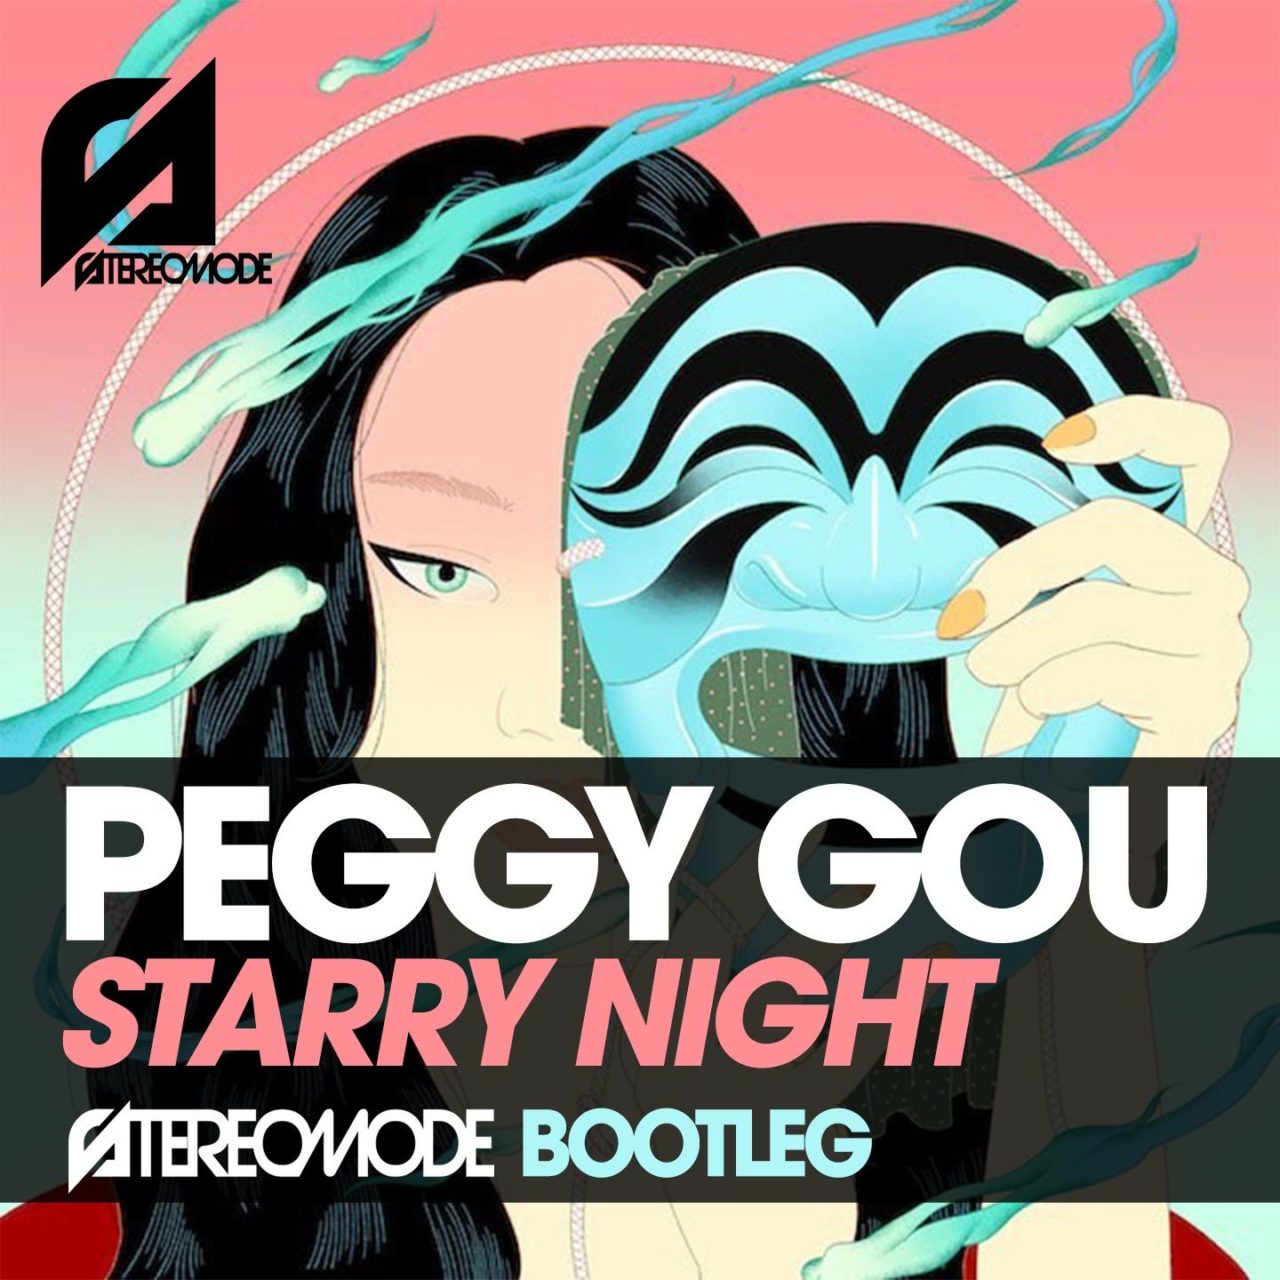 Peggy gou starry night lyrics